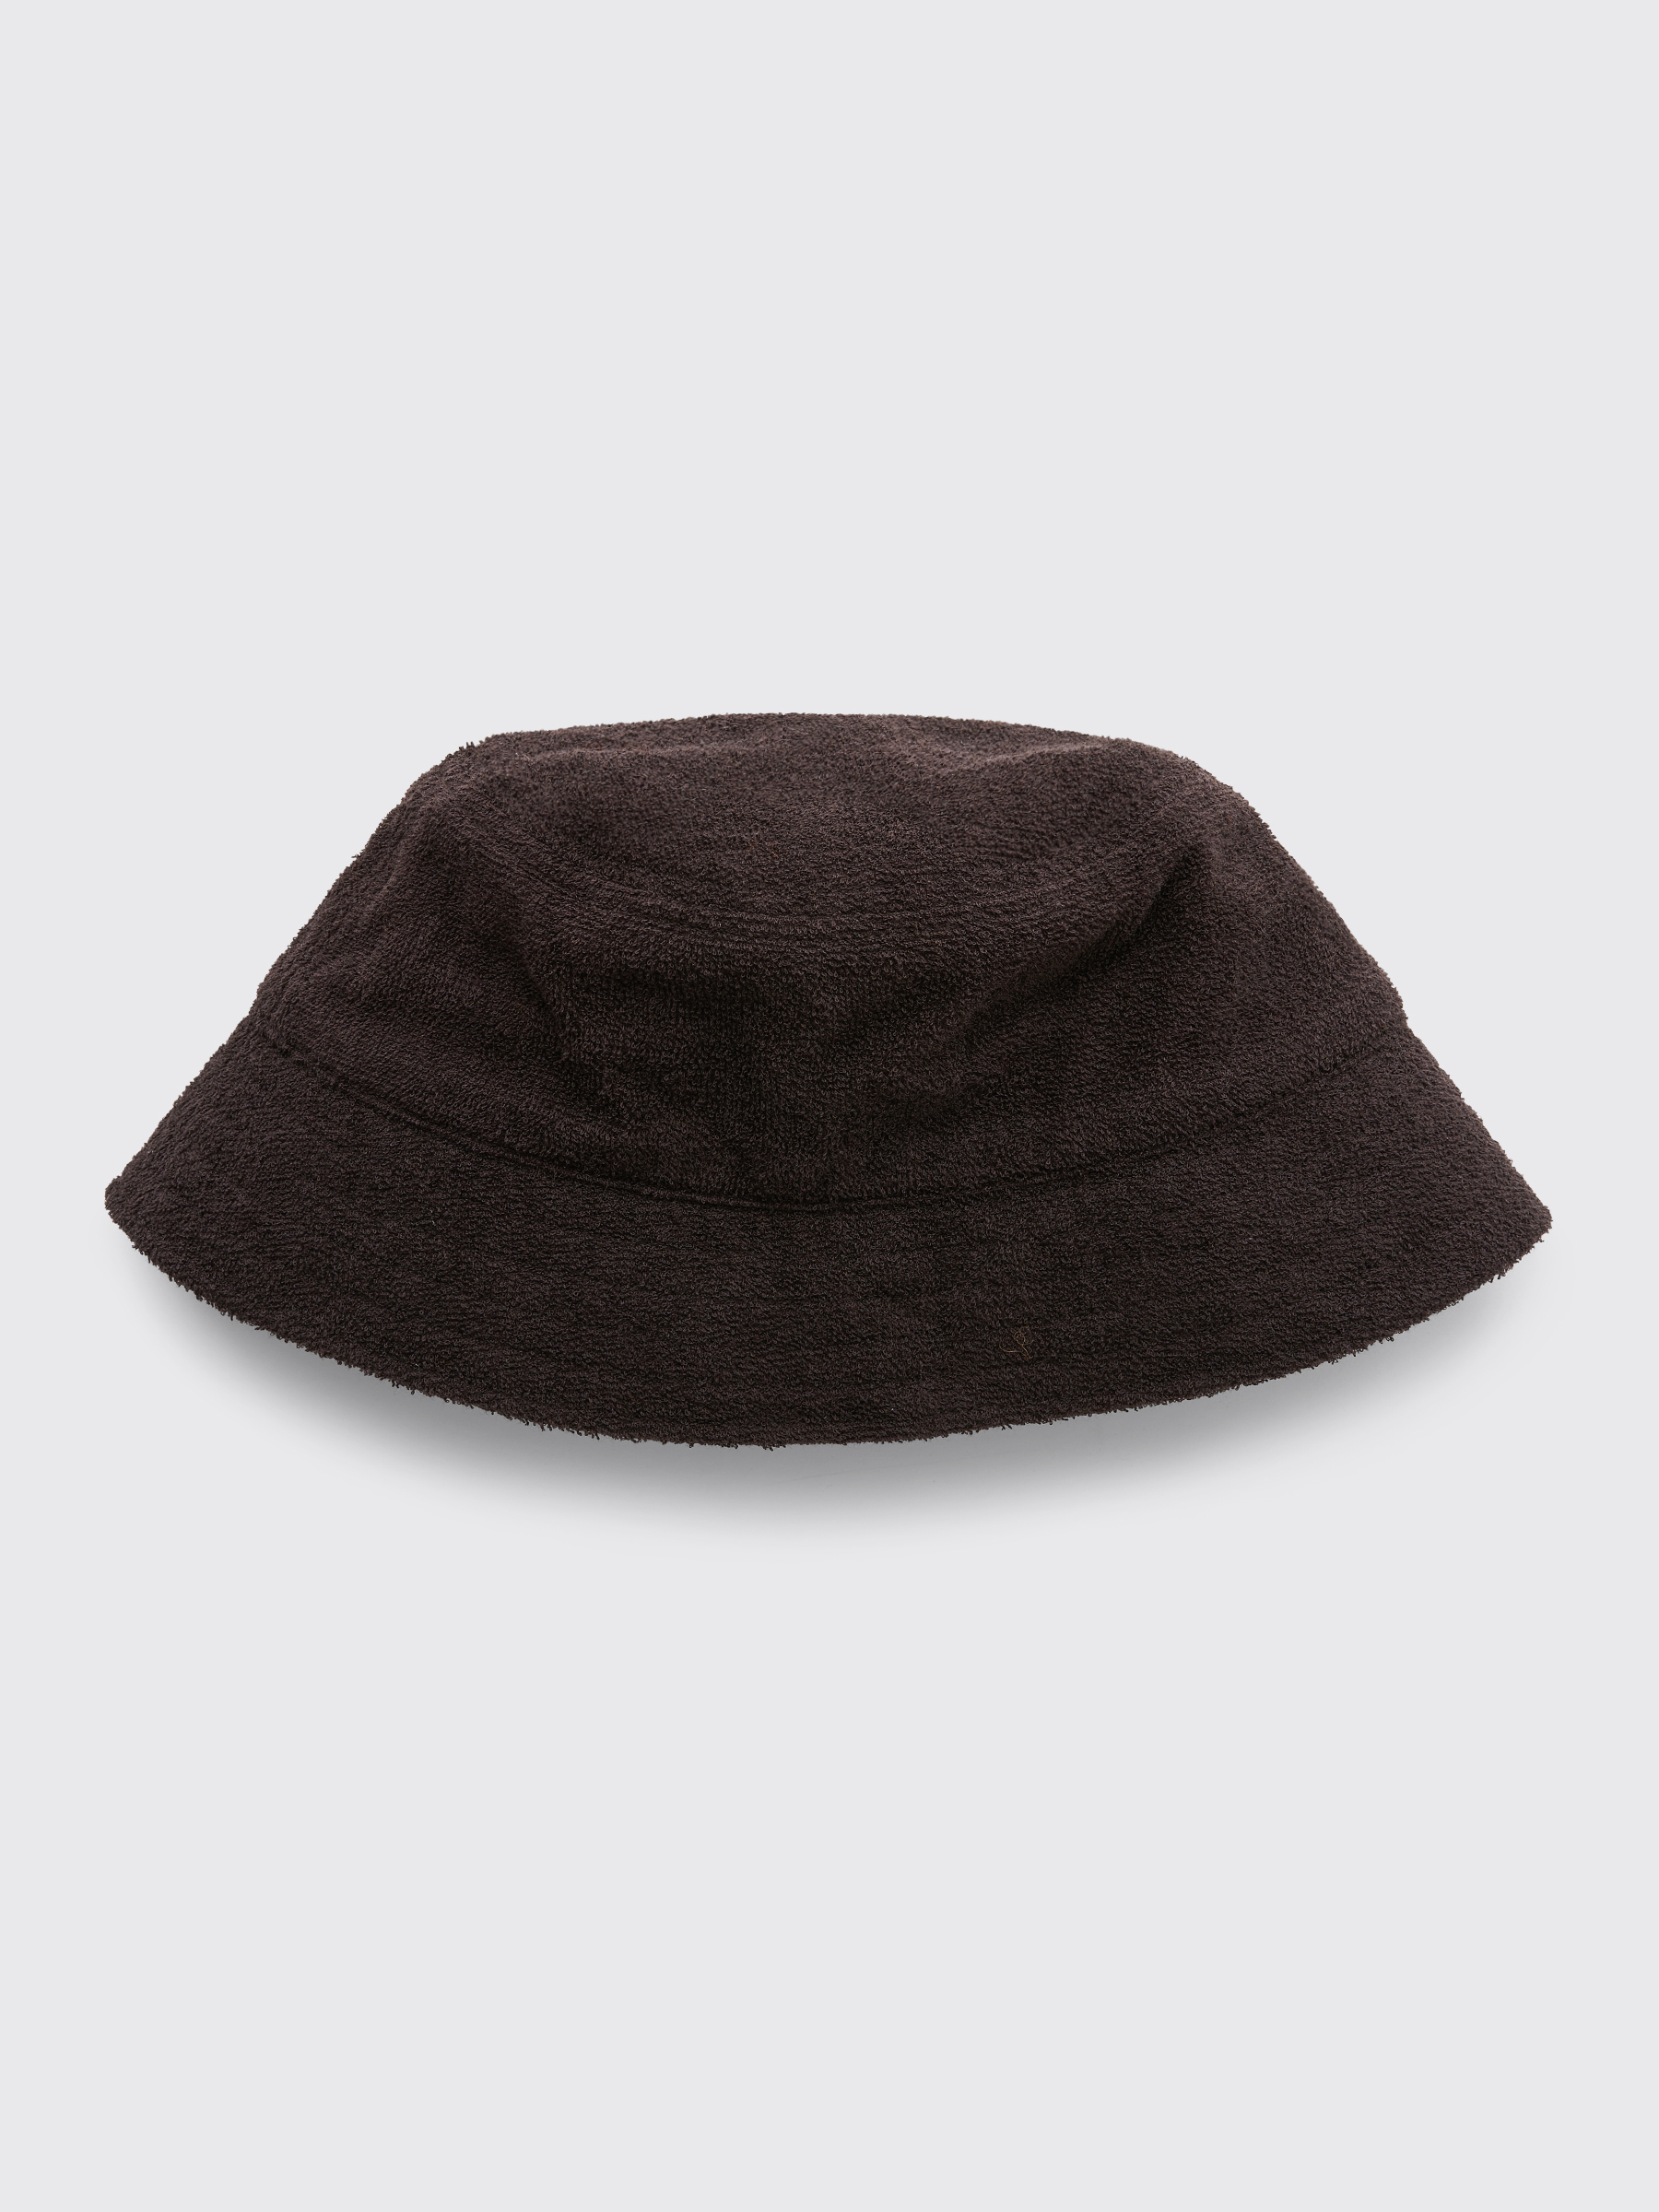 Auralee Terry Cloth Bucket Hat Brown Made By Kijima Takayuki